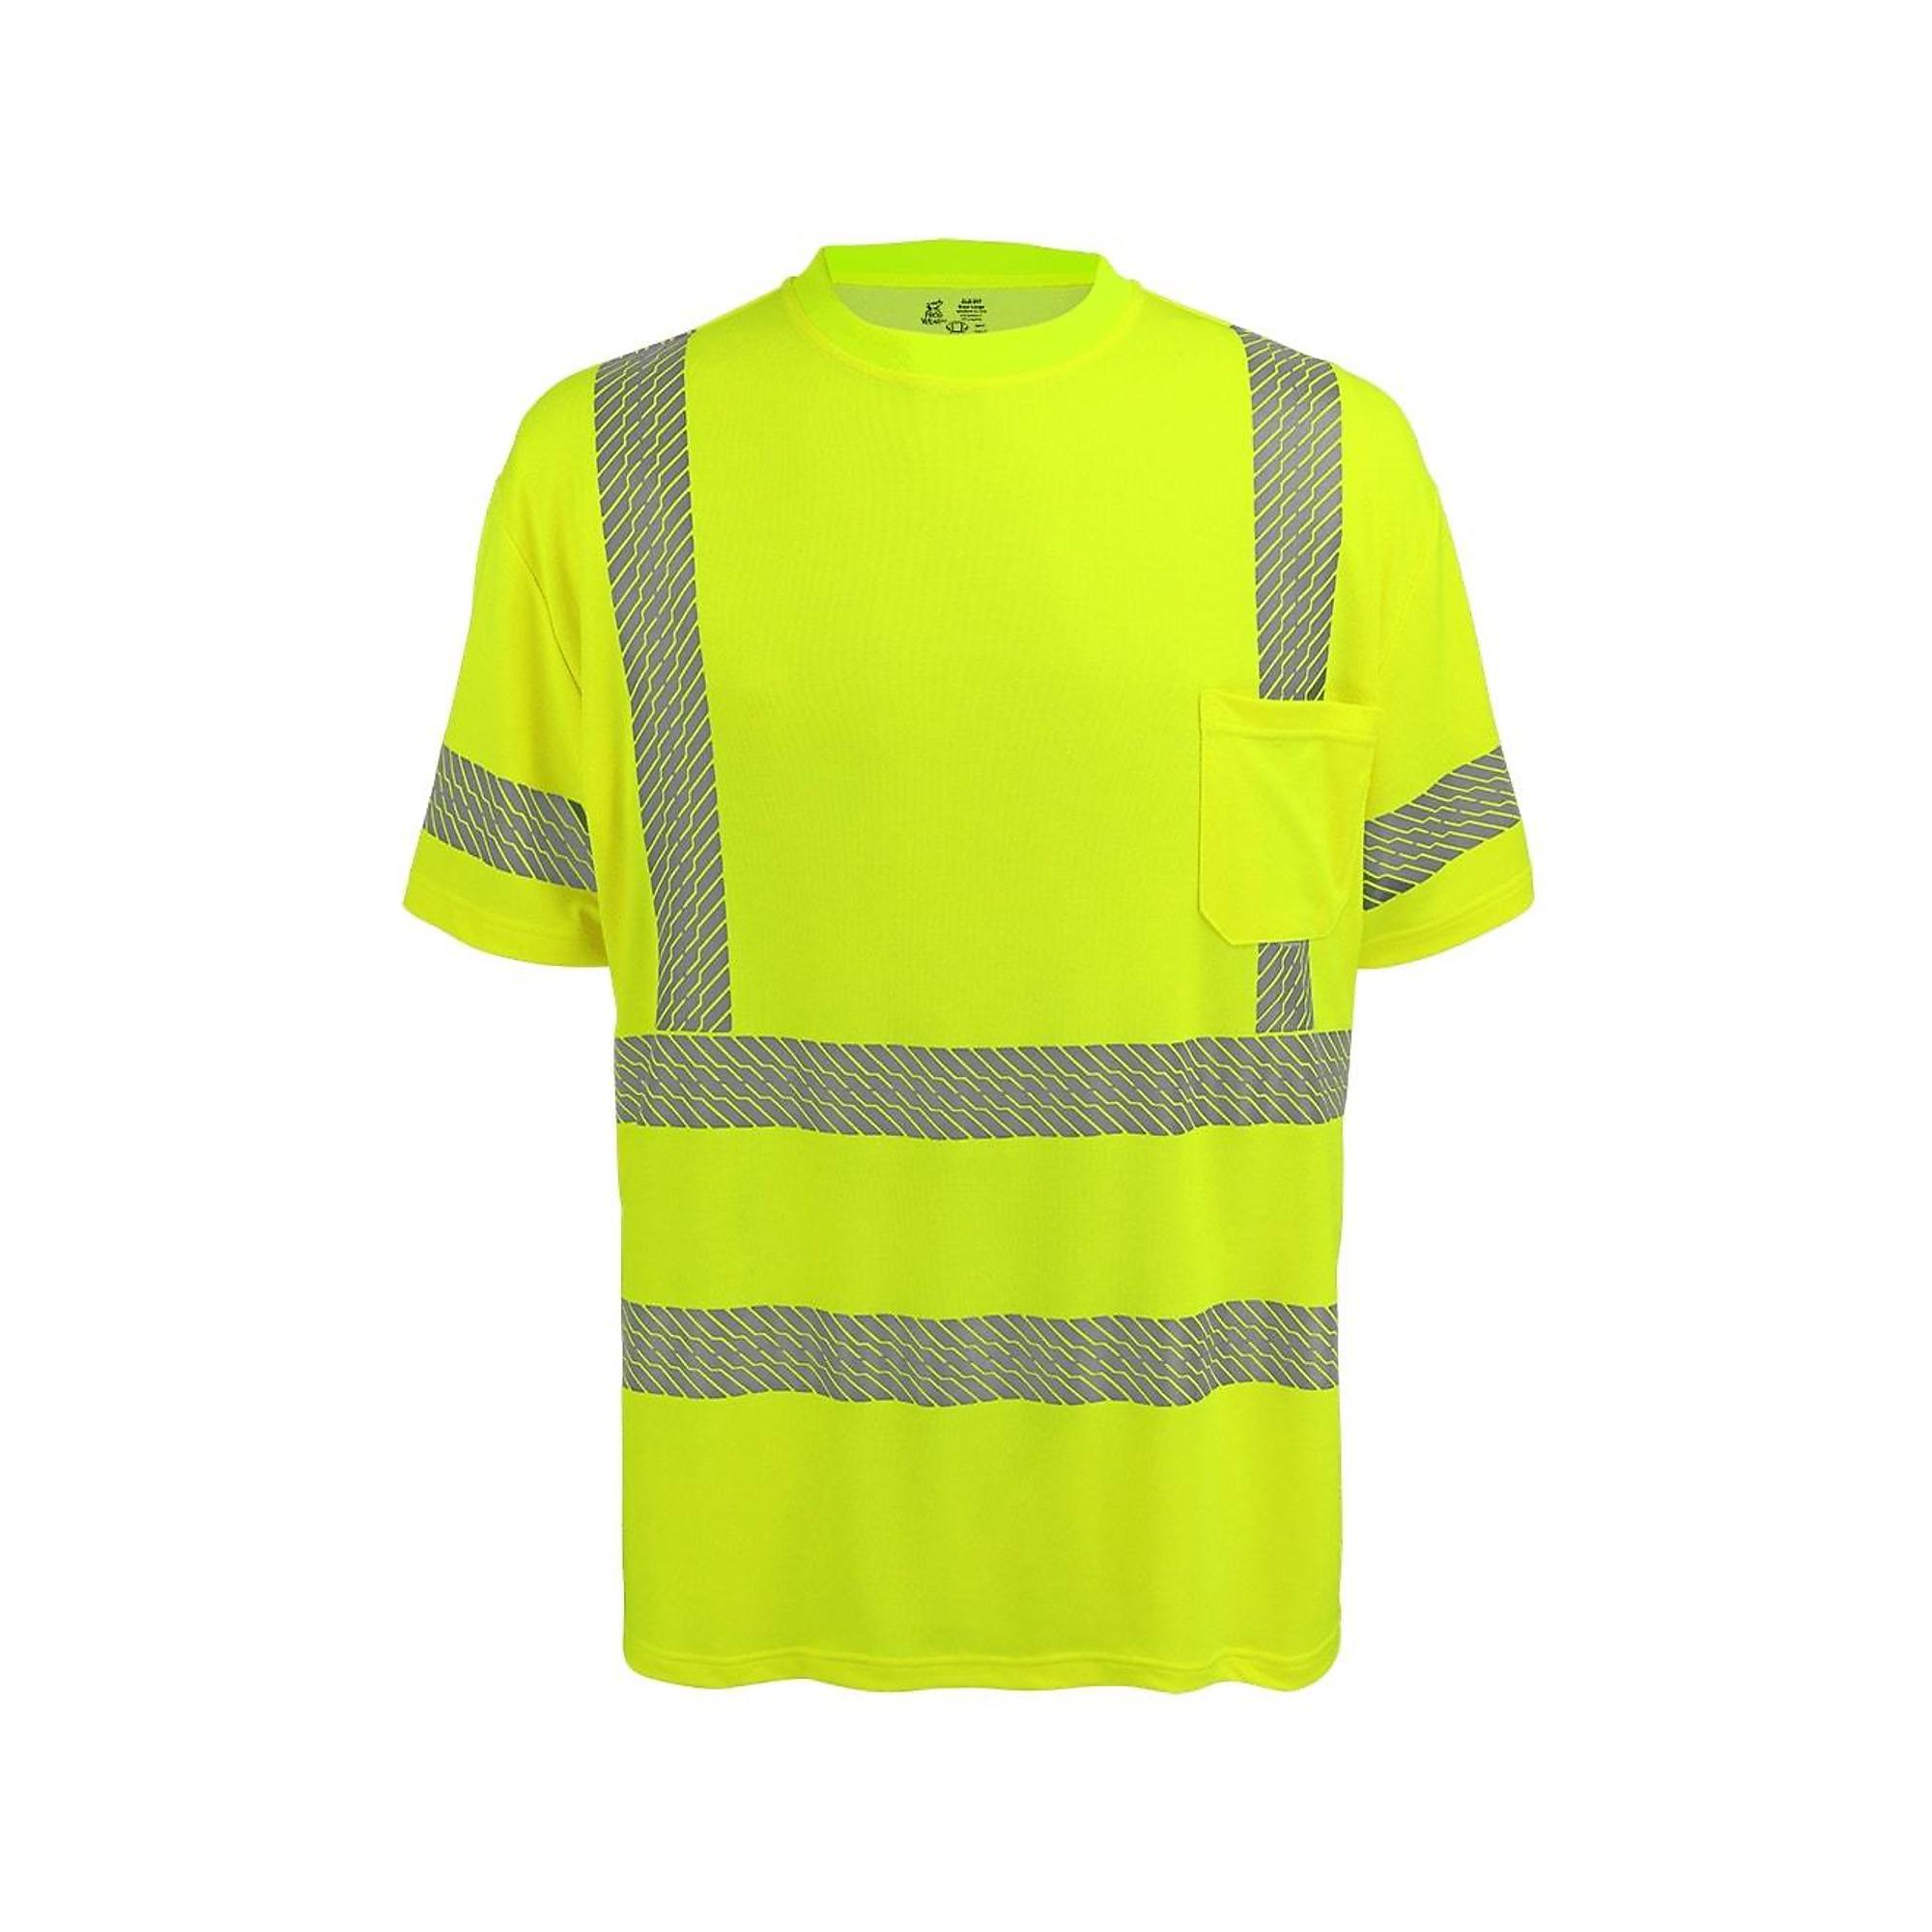 FrogWear, HV Yellow/Green,Class 3Bamboo Self-Wicking, Athletic Shirt, Size 2XL, Model GLO-217-2XL